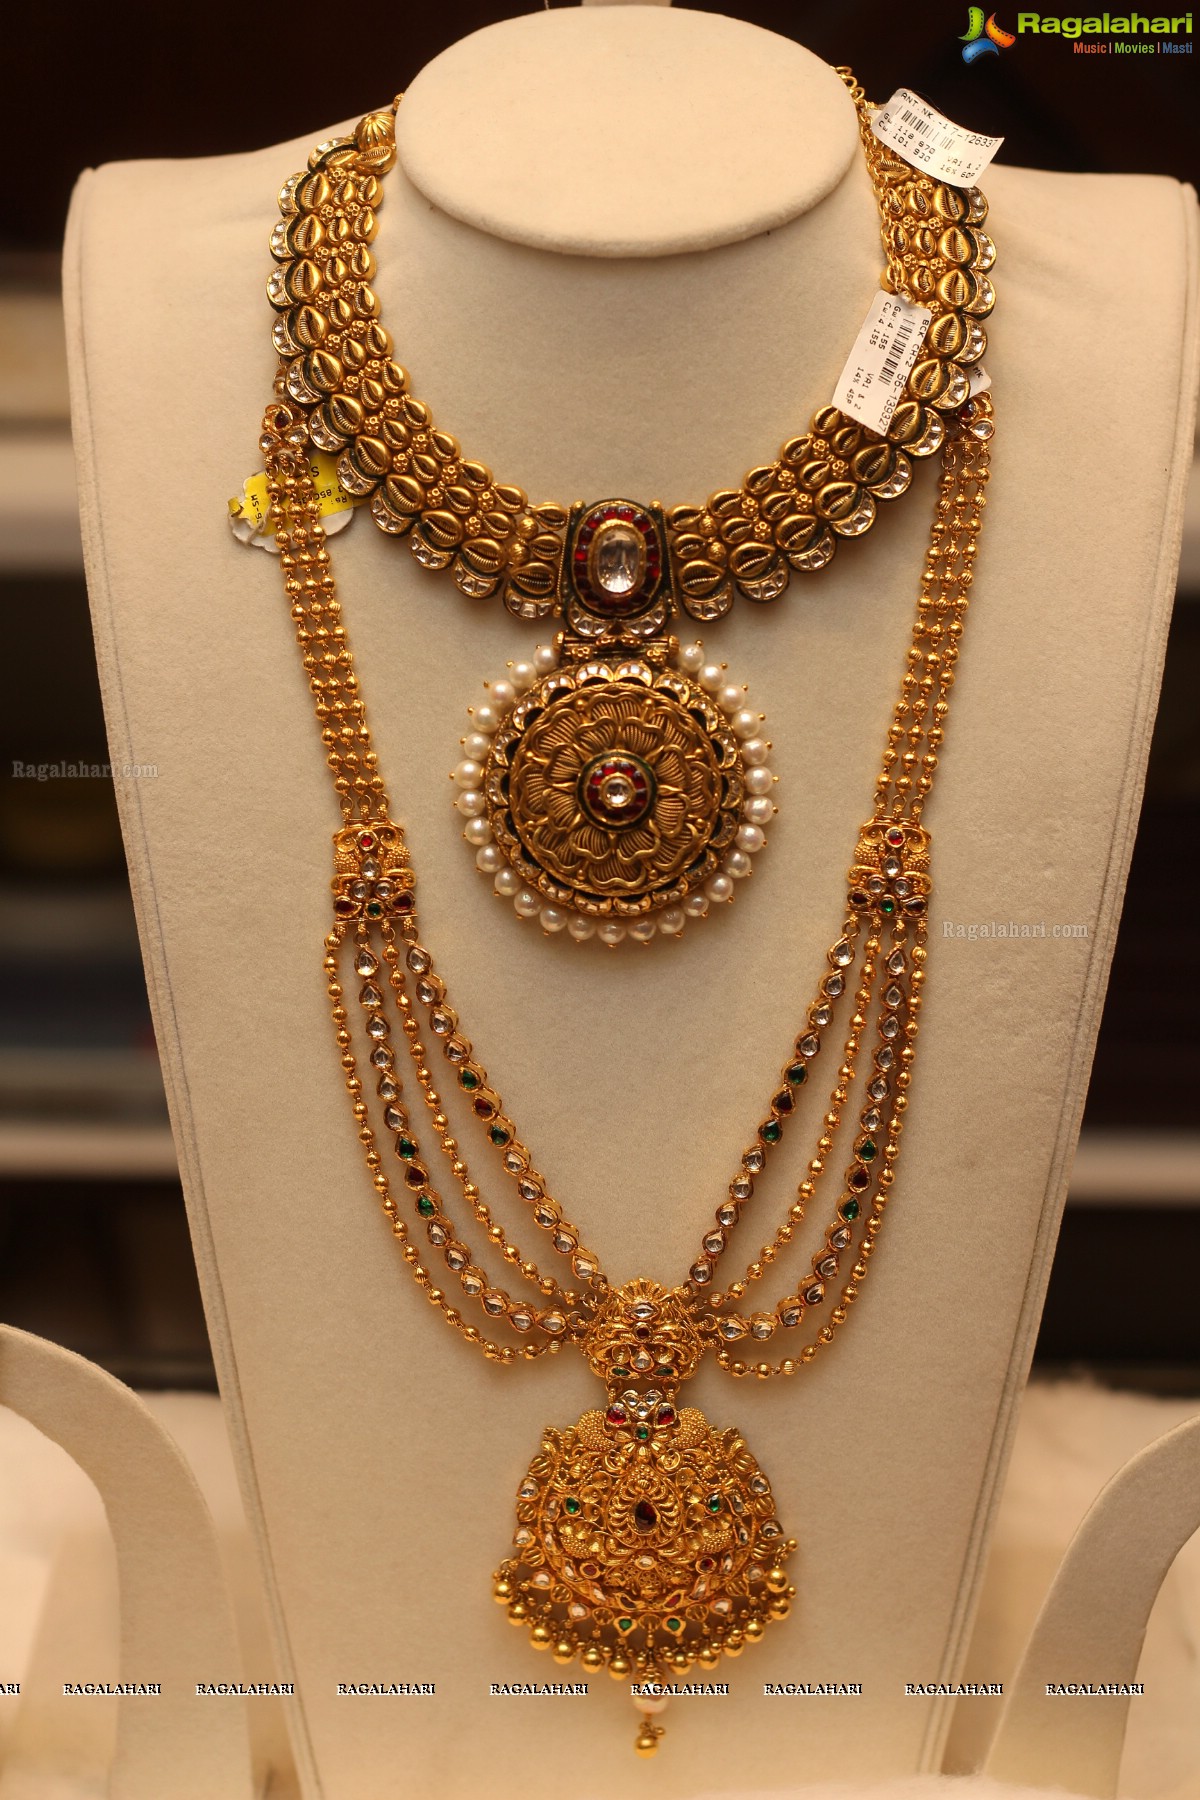 Manepally Jewellers Akshaya Tritiya Collections 2015 Launch